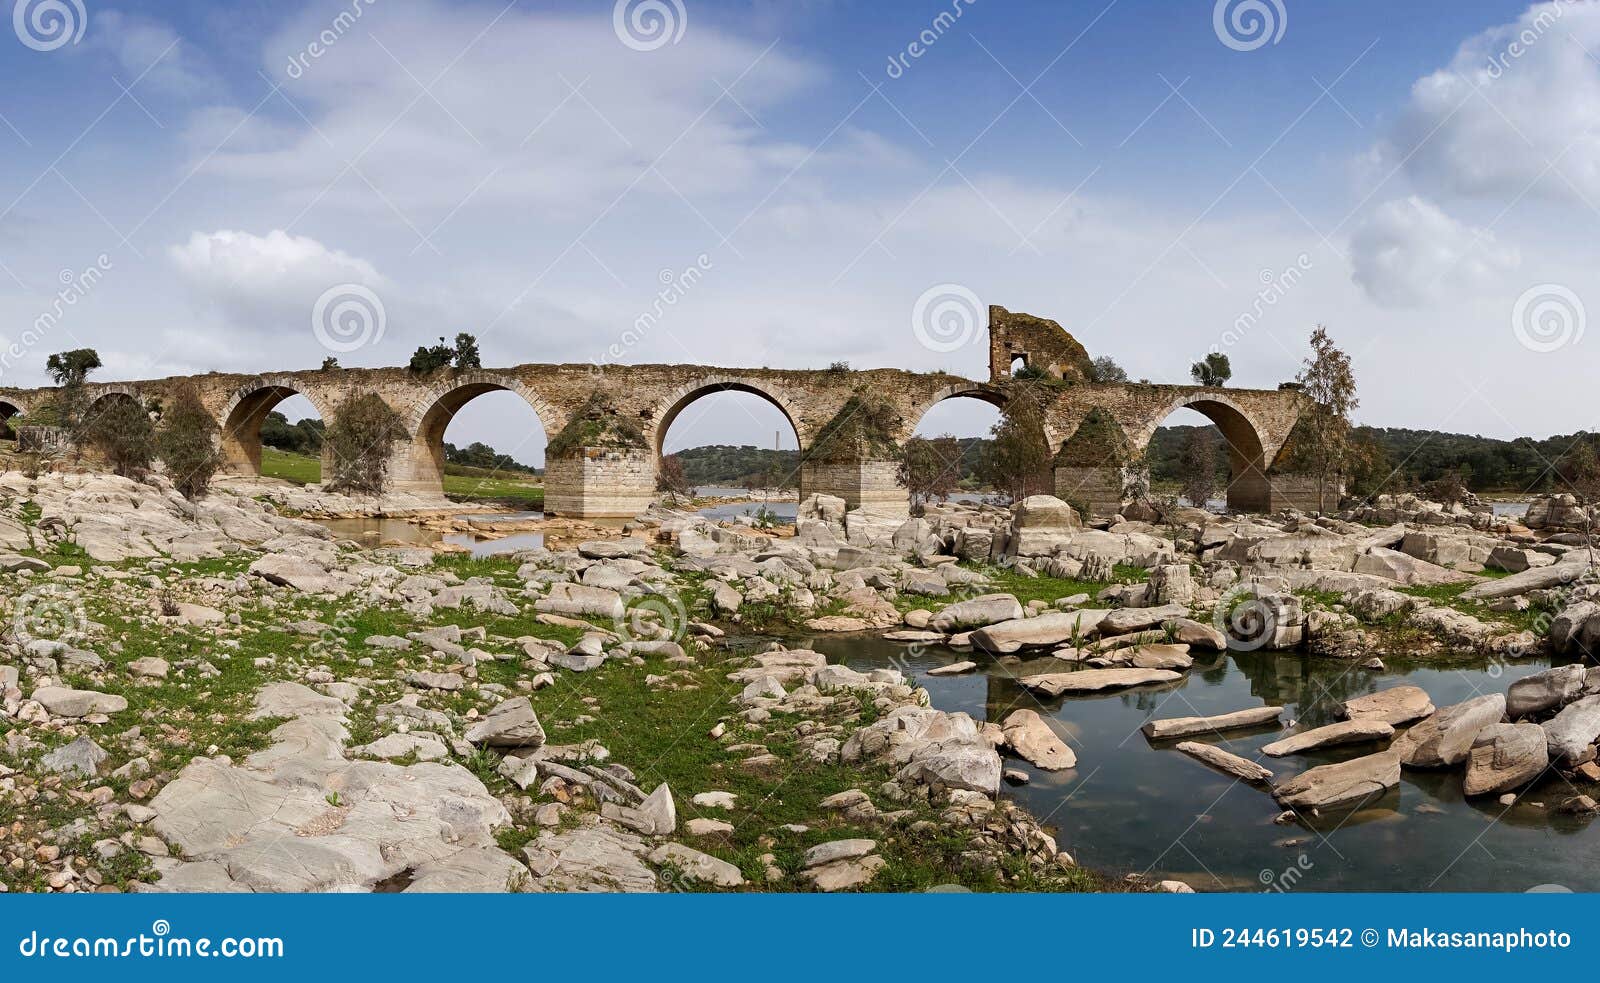 panorama view of the historic ponte de ajuda bridge over the guadiana river